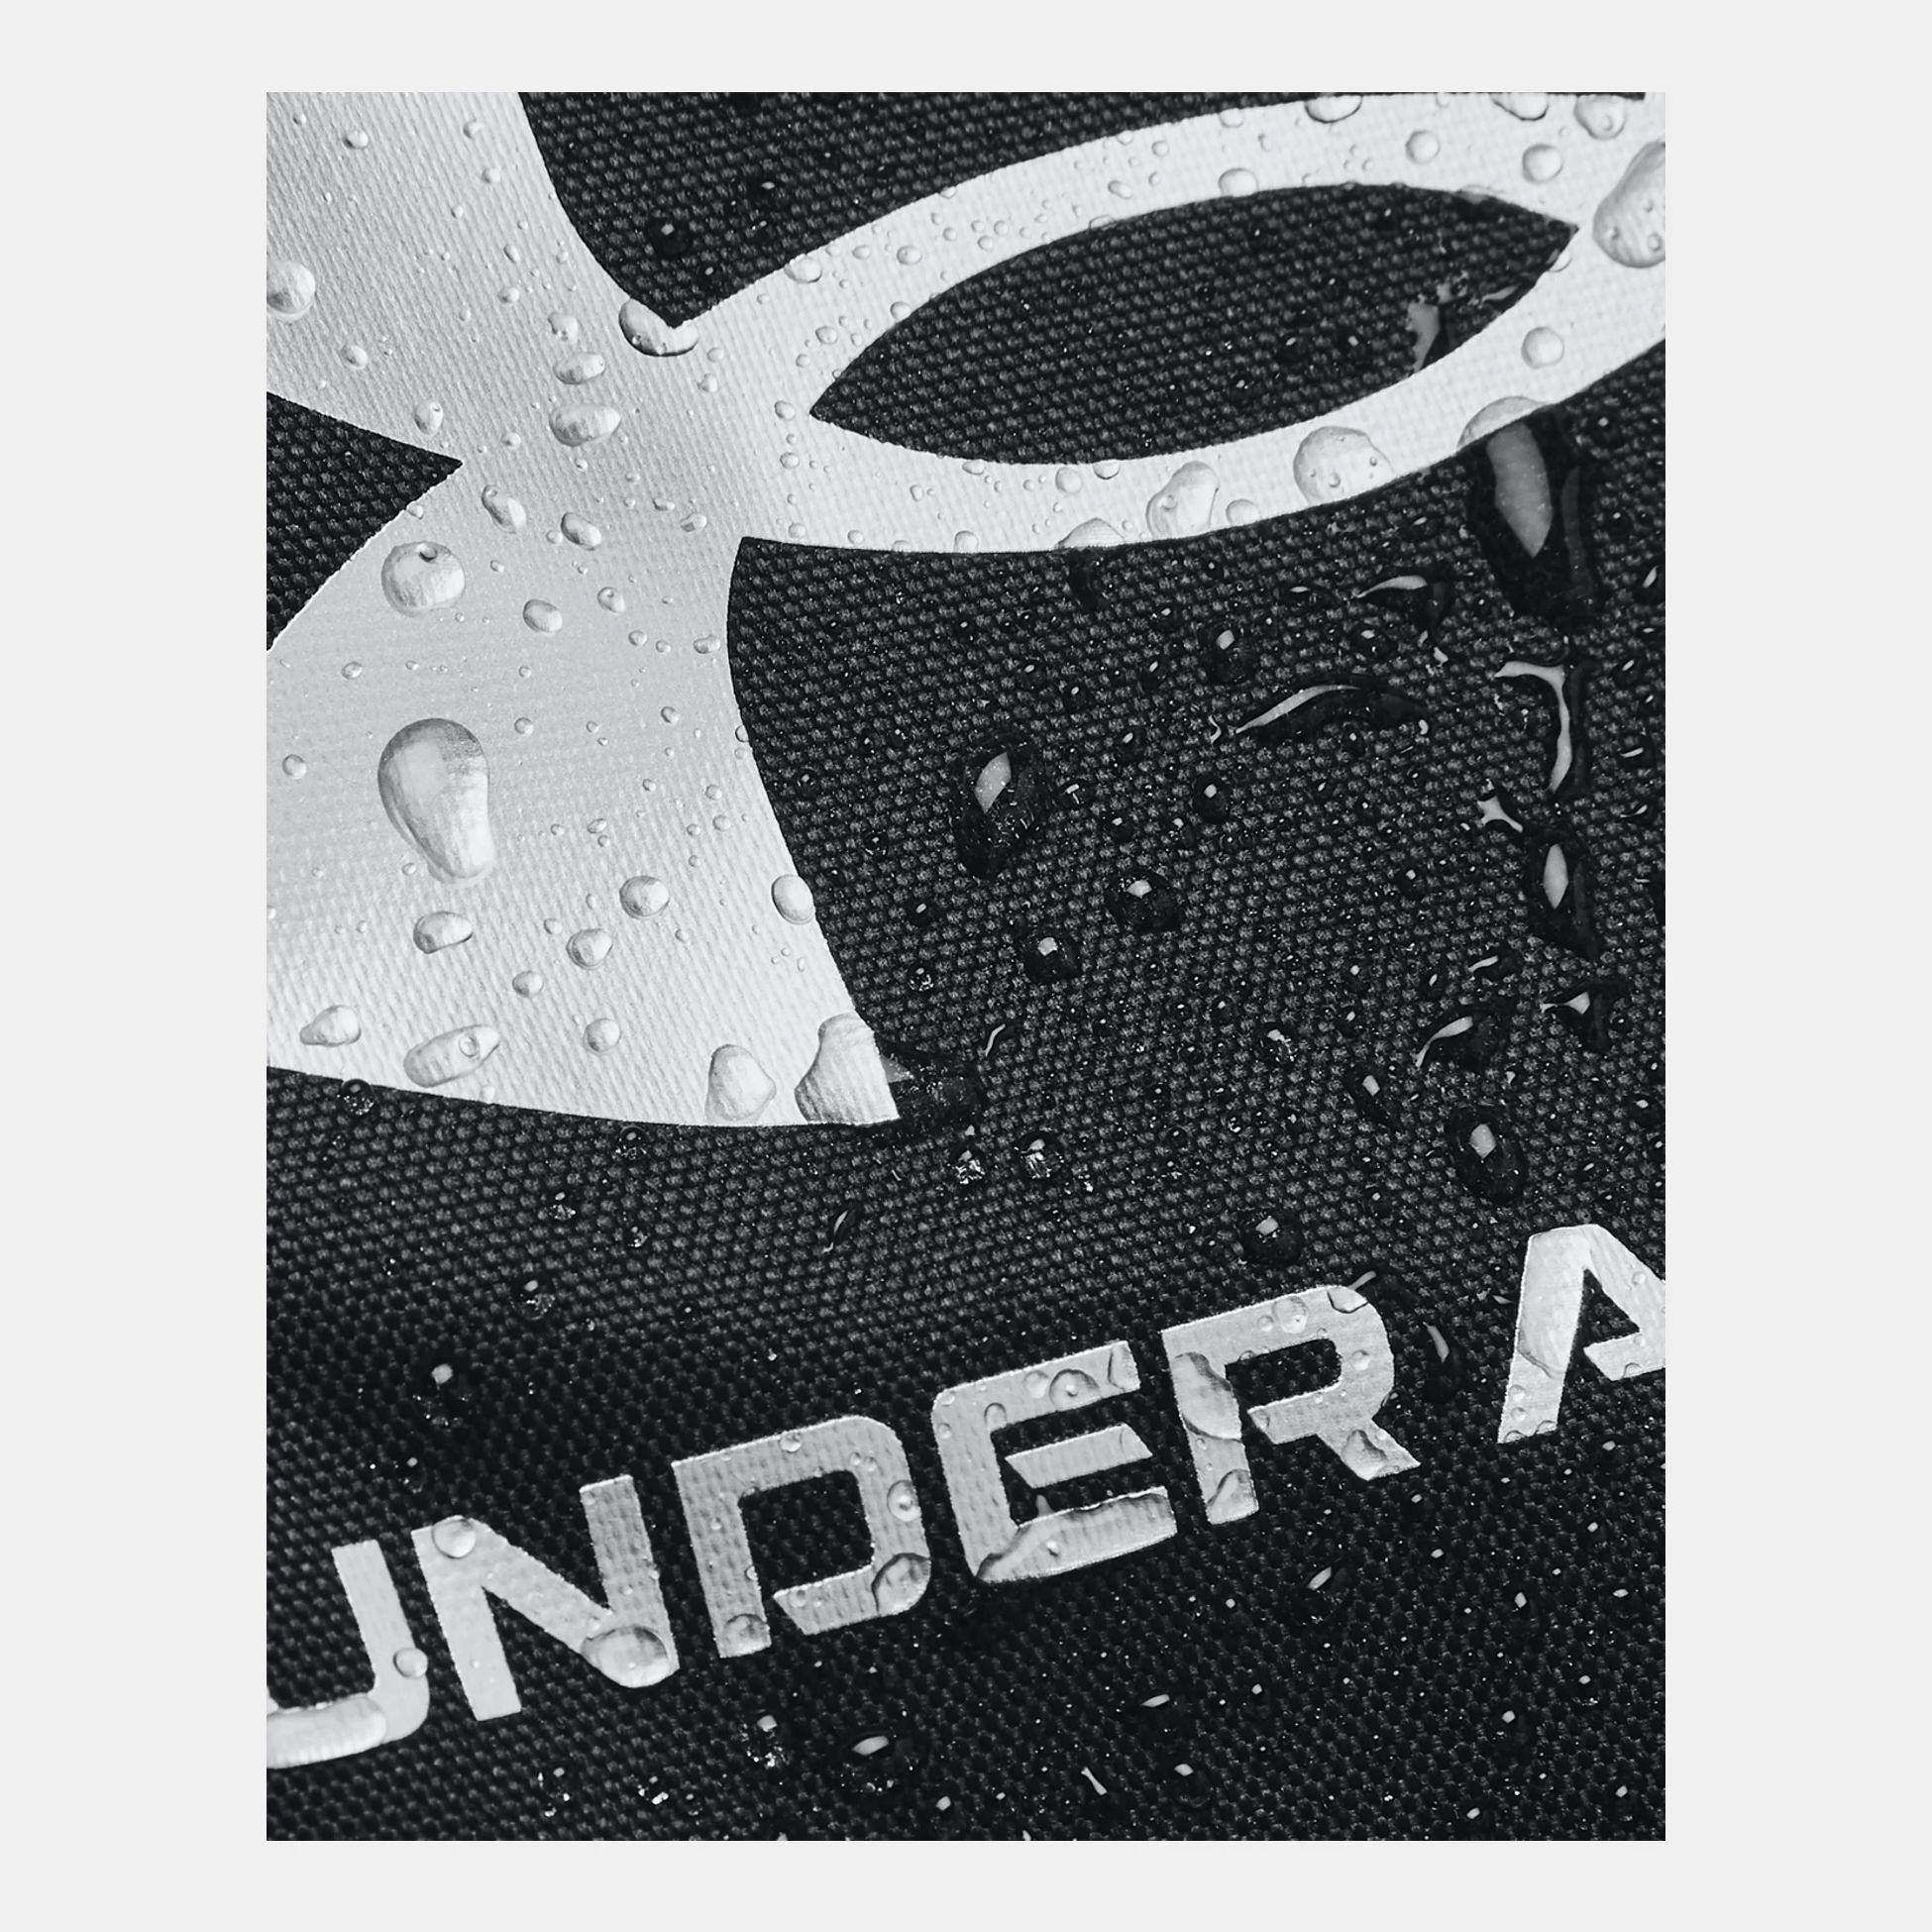 Rucsaci -  under armour UA Undeniable 5.0 Small Duffle Bag